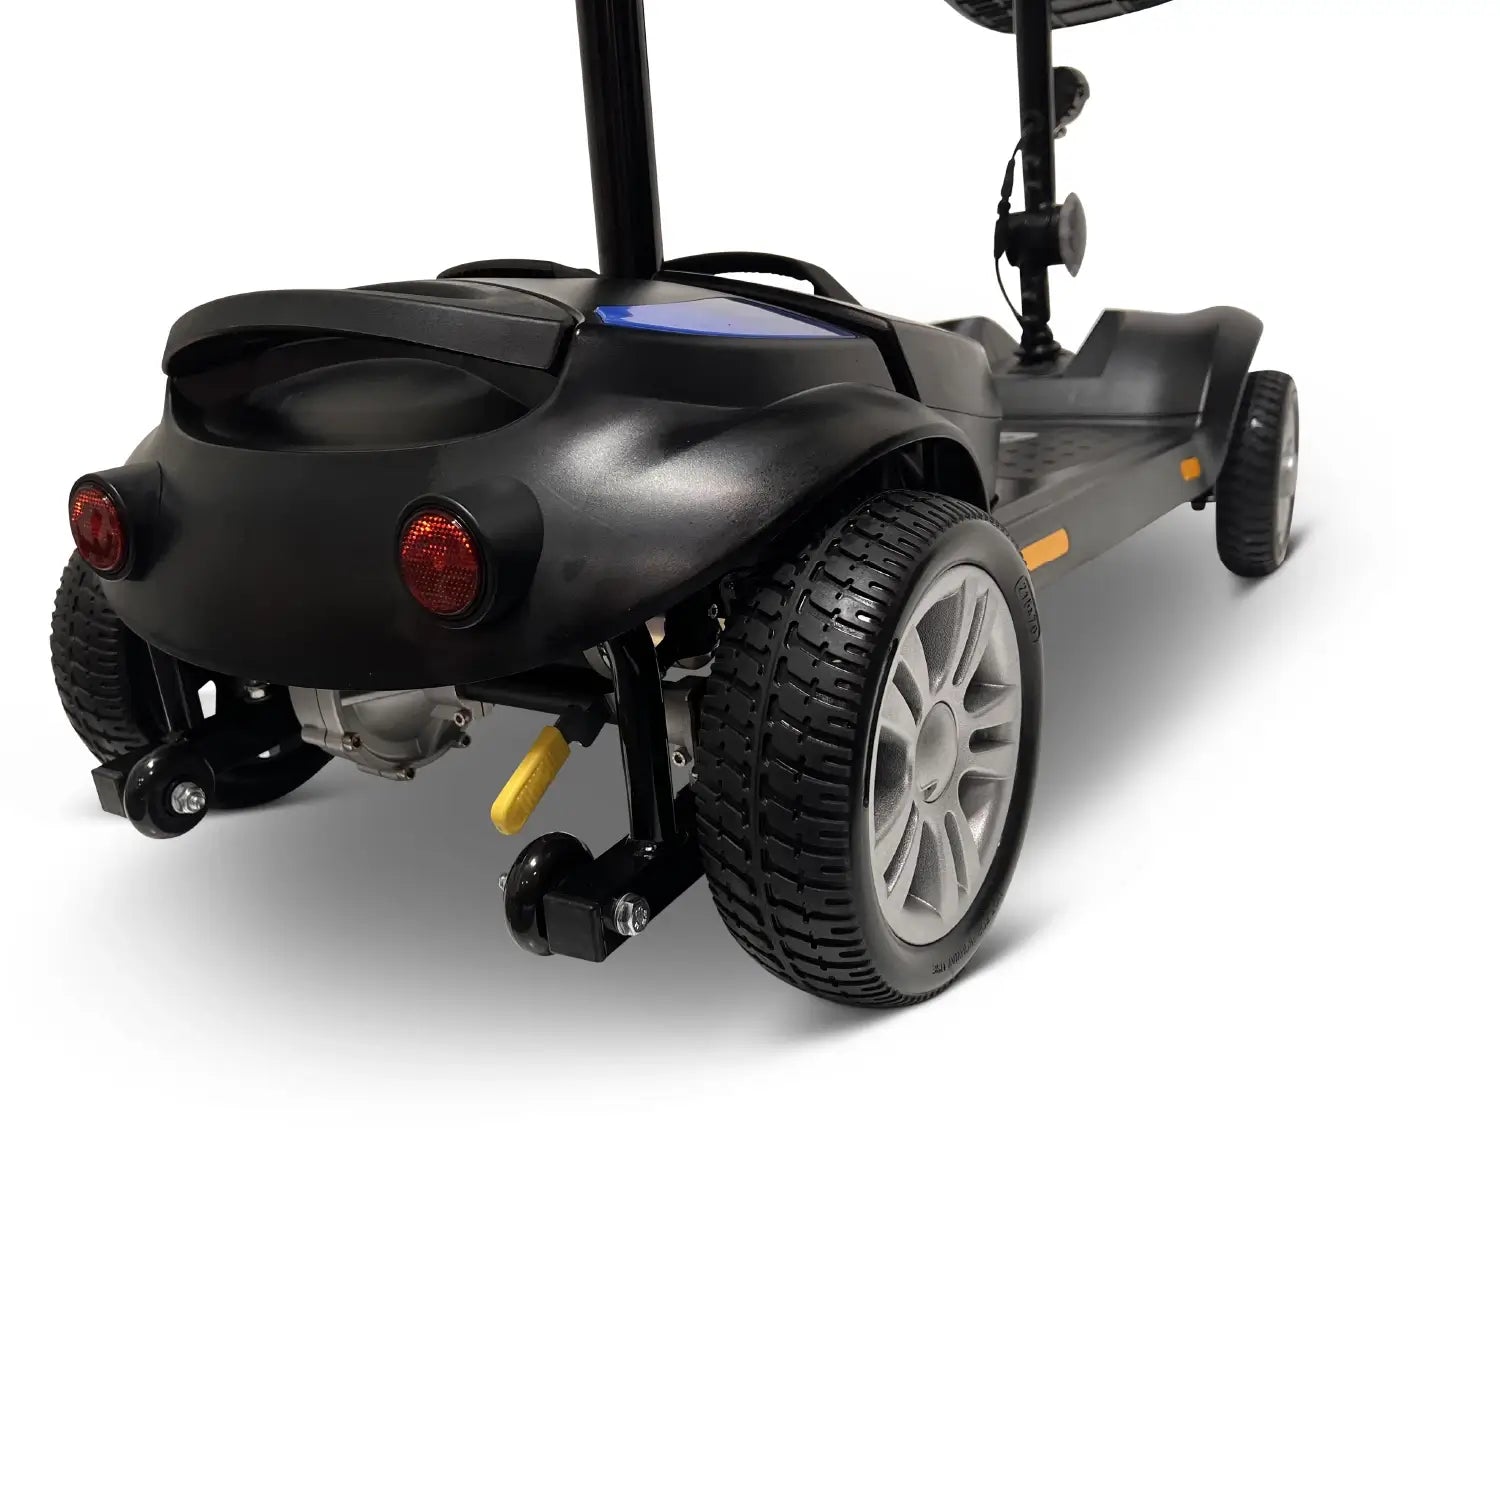 COMFYGO | Z-4 Ultra-Light Electric Mobility Scooter With Quick-Detach Frame | Z-4